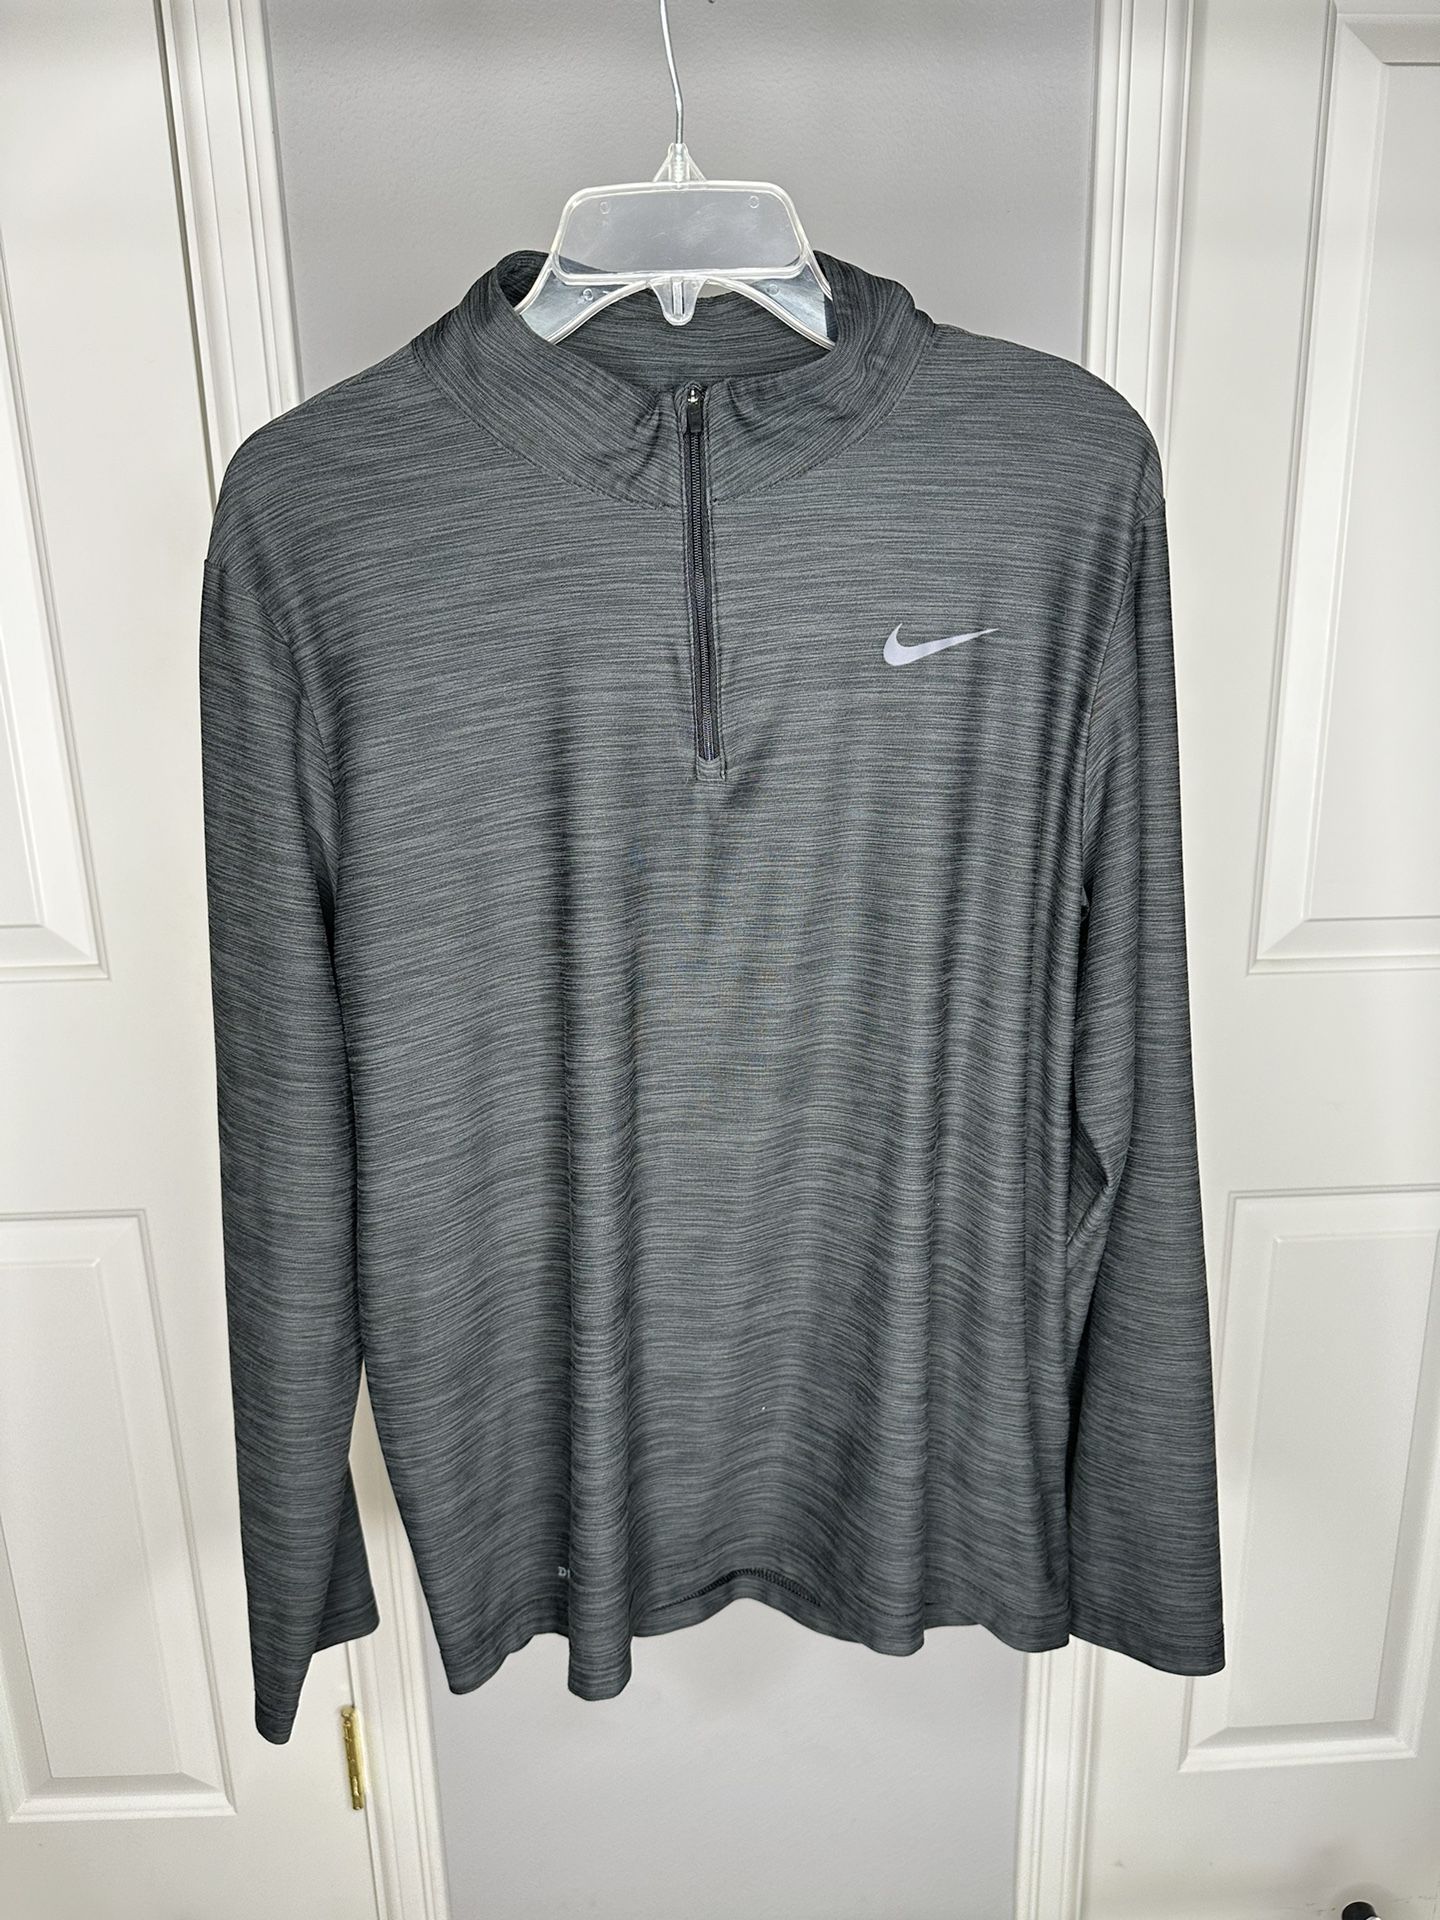 Nike Quarter Zip Pullover Jacket (Men’s Size Medium)